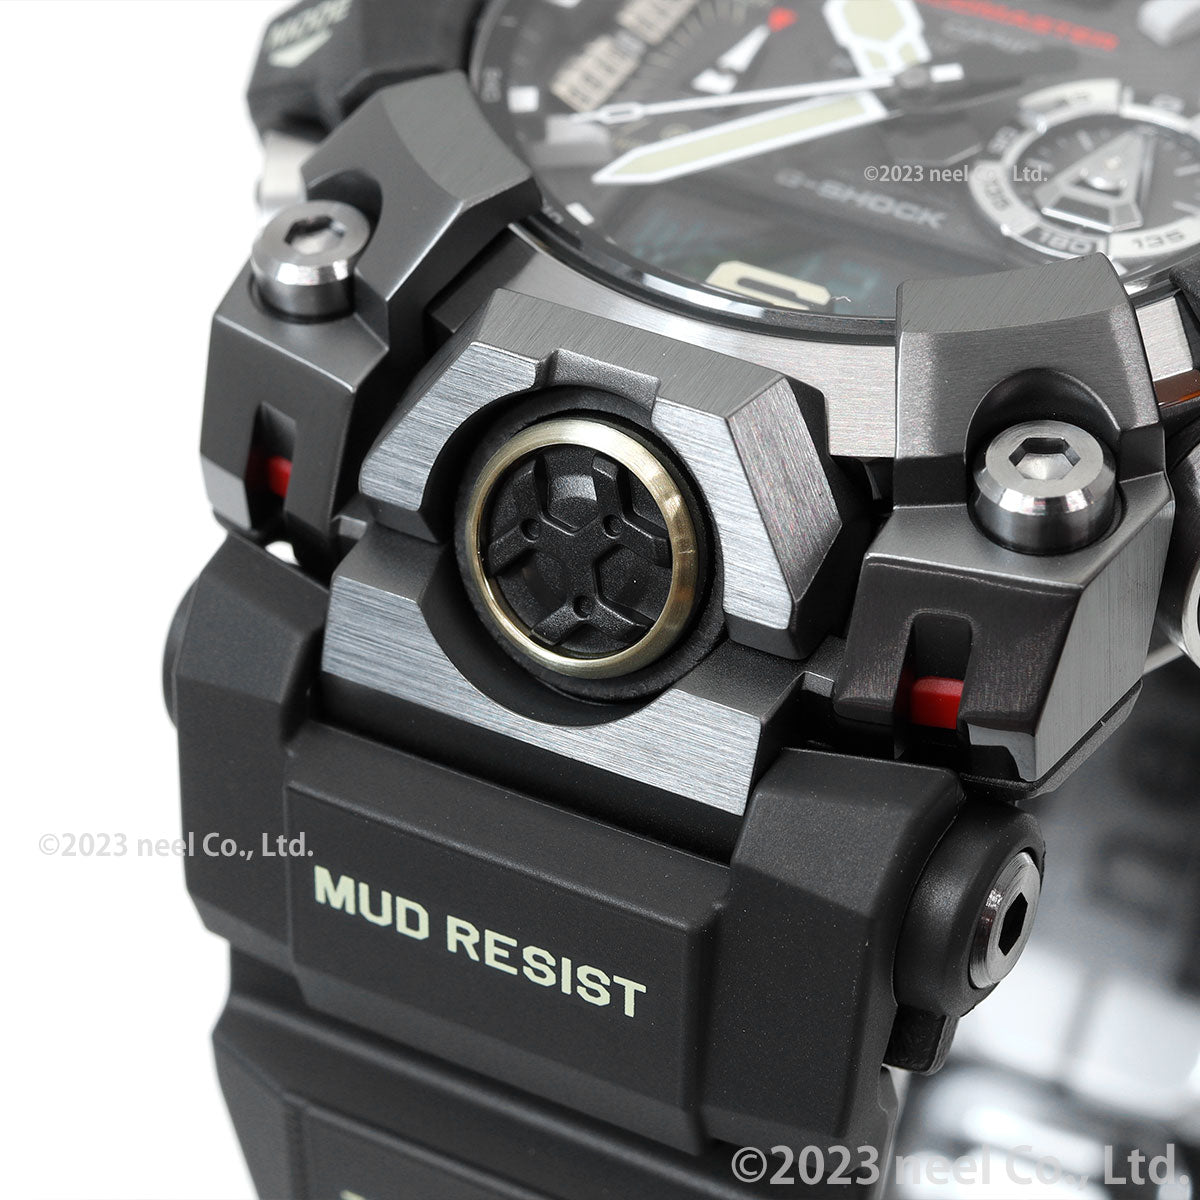 G-SHOCK 電波 ソーラー 電波時計 カシオ Gショック マッドマスター MUDMASTER 腕時計 メンズ MASTER OF G GWG-B1000-1AJF